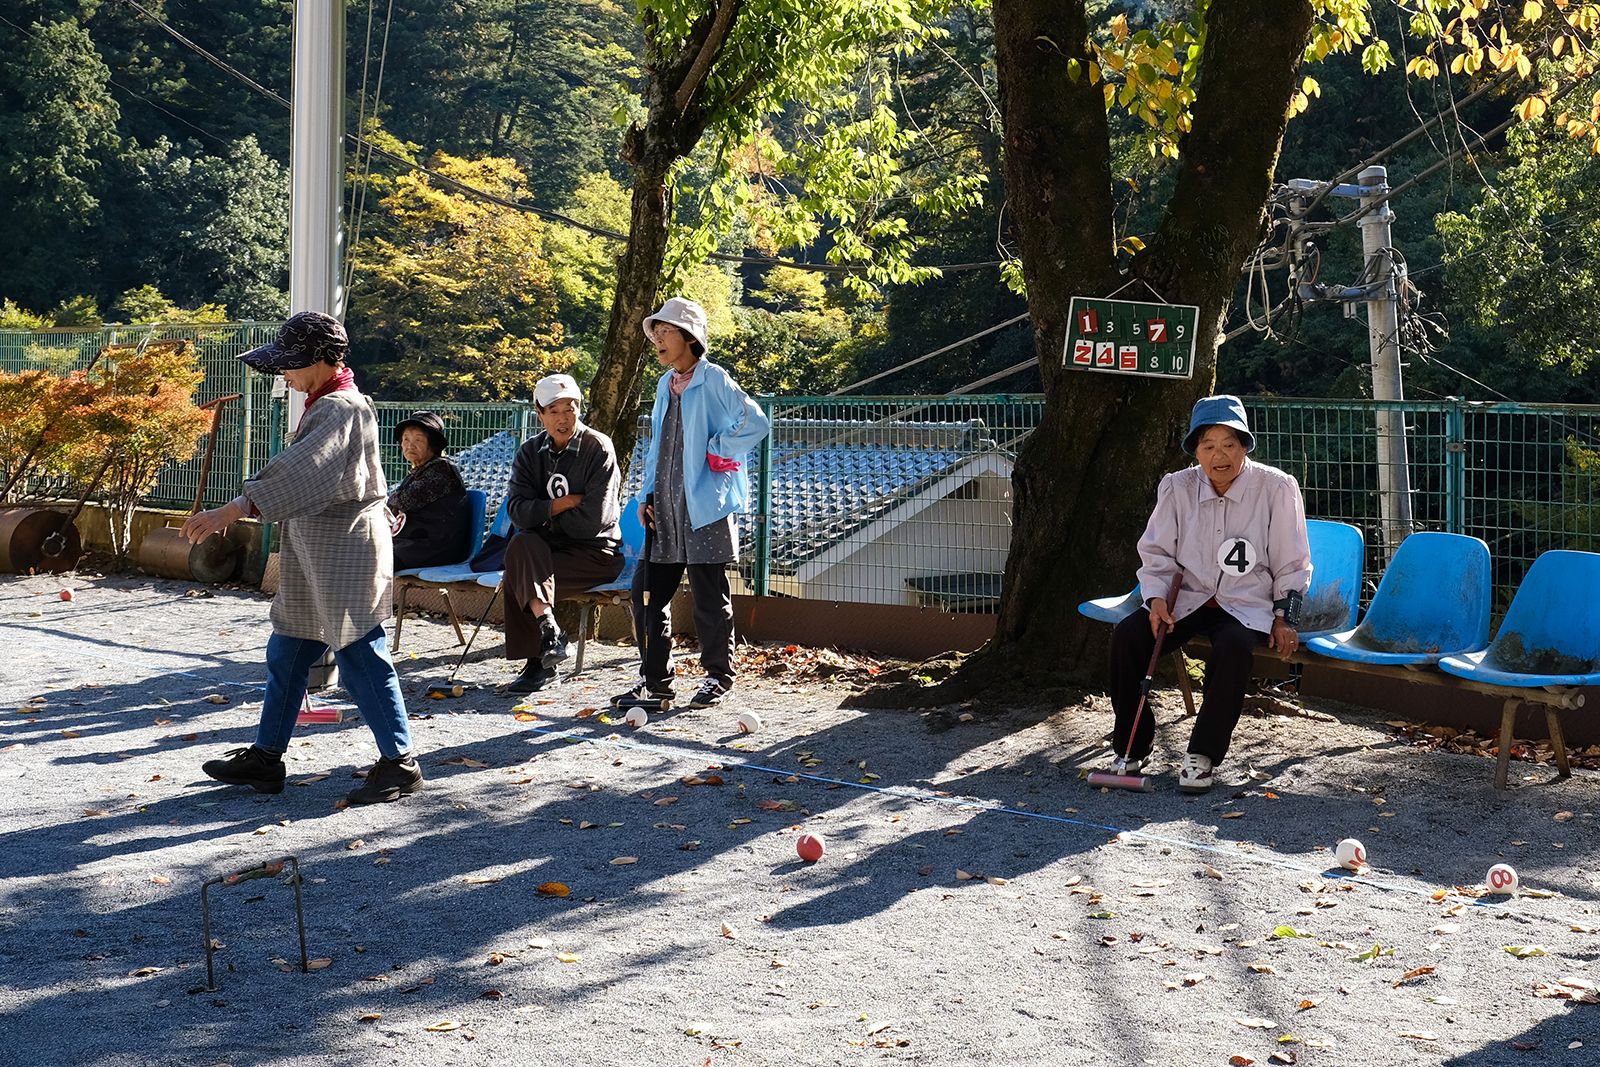 These Okutama locals regularly meet to play gate ball. Image courtesy of Emiko Jozuka. Japan, 2018.